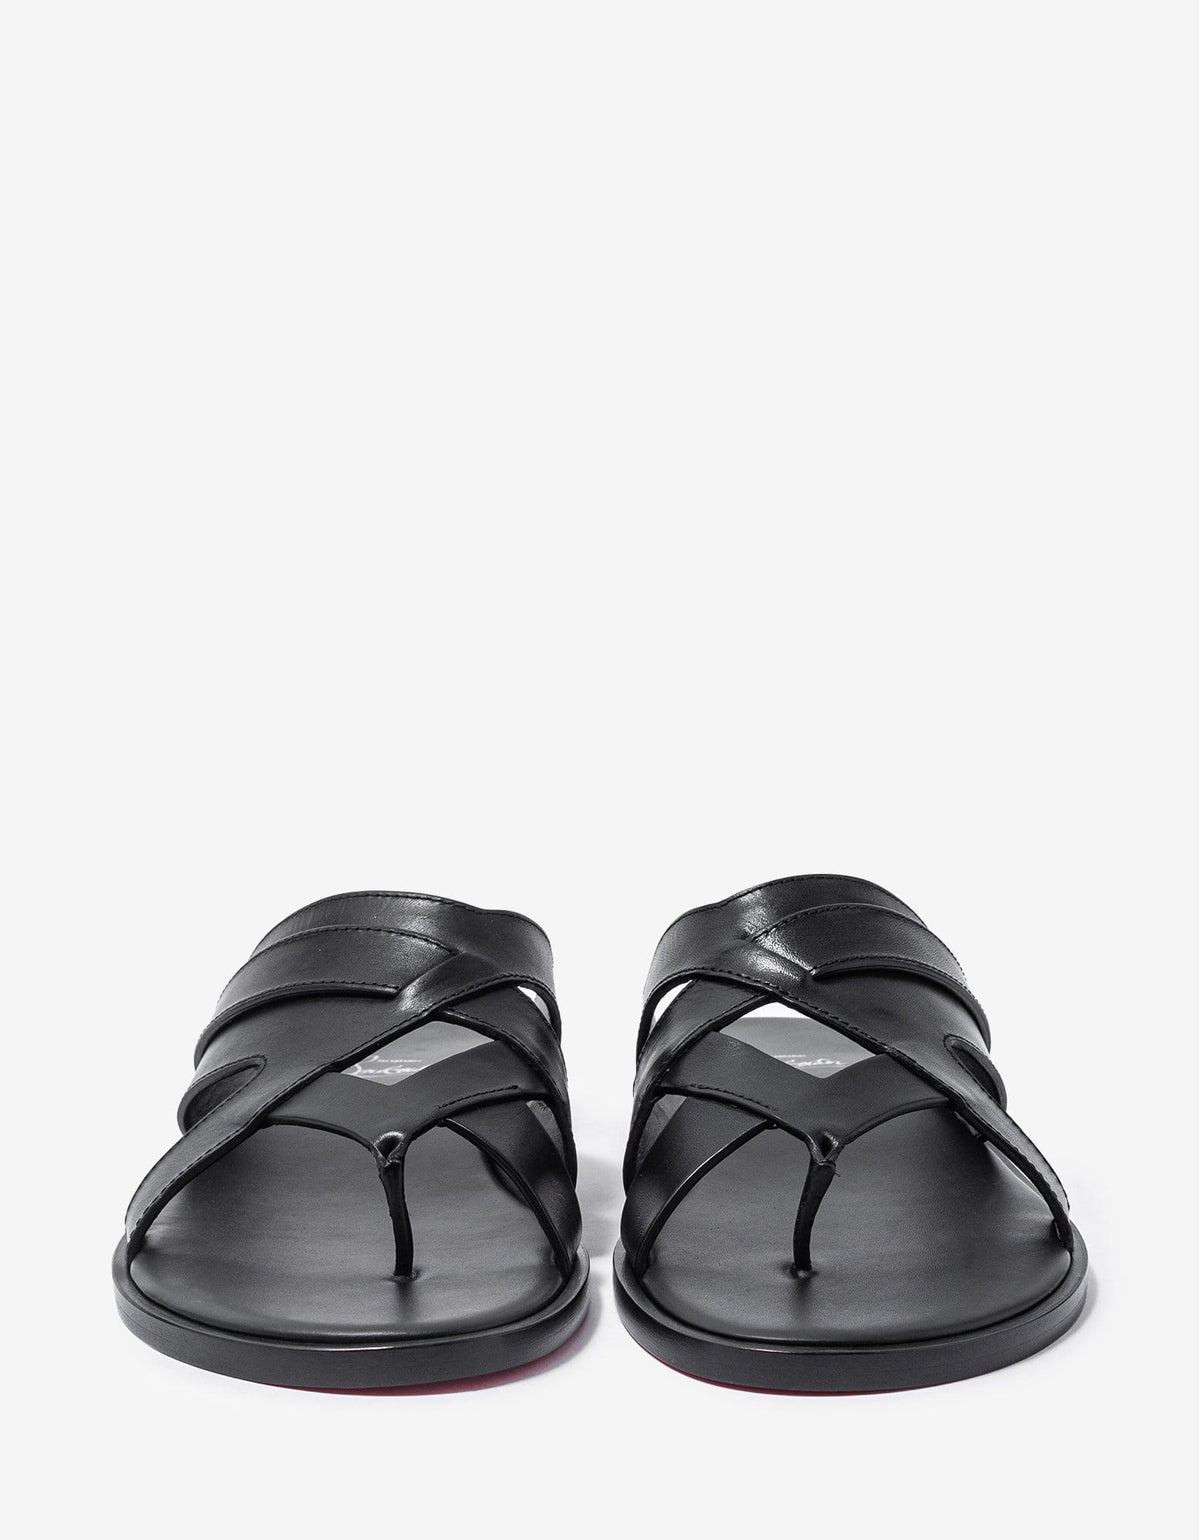 Christian Louboutin Sinouhe Black Leather Sandals